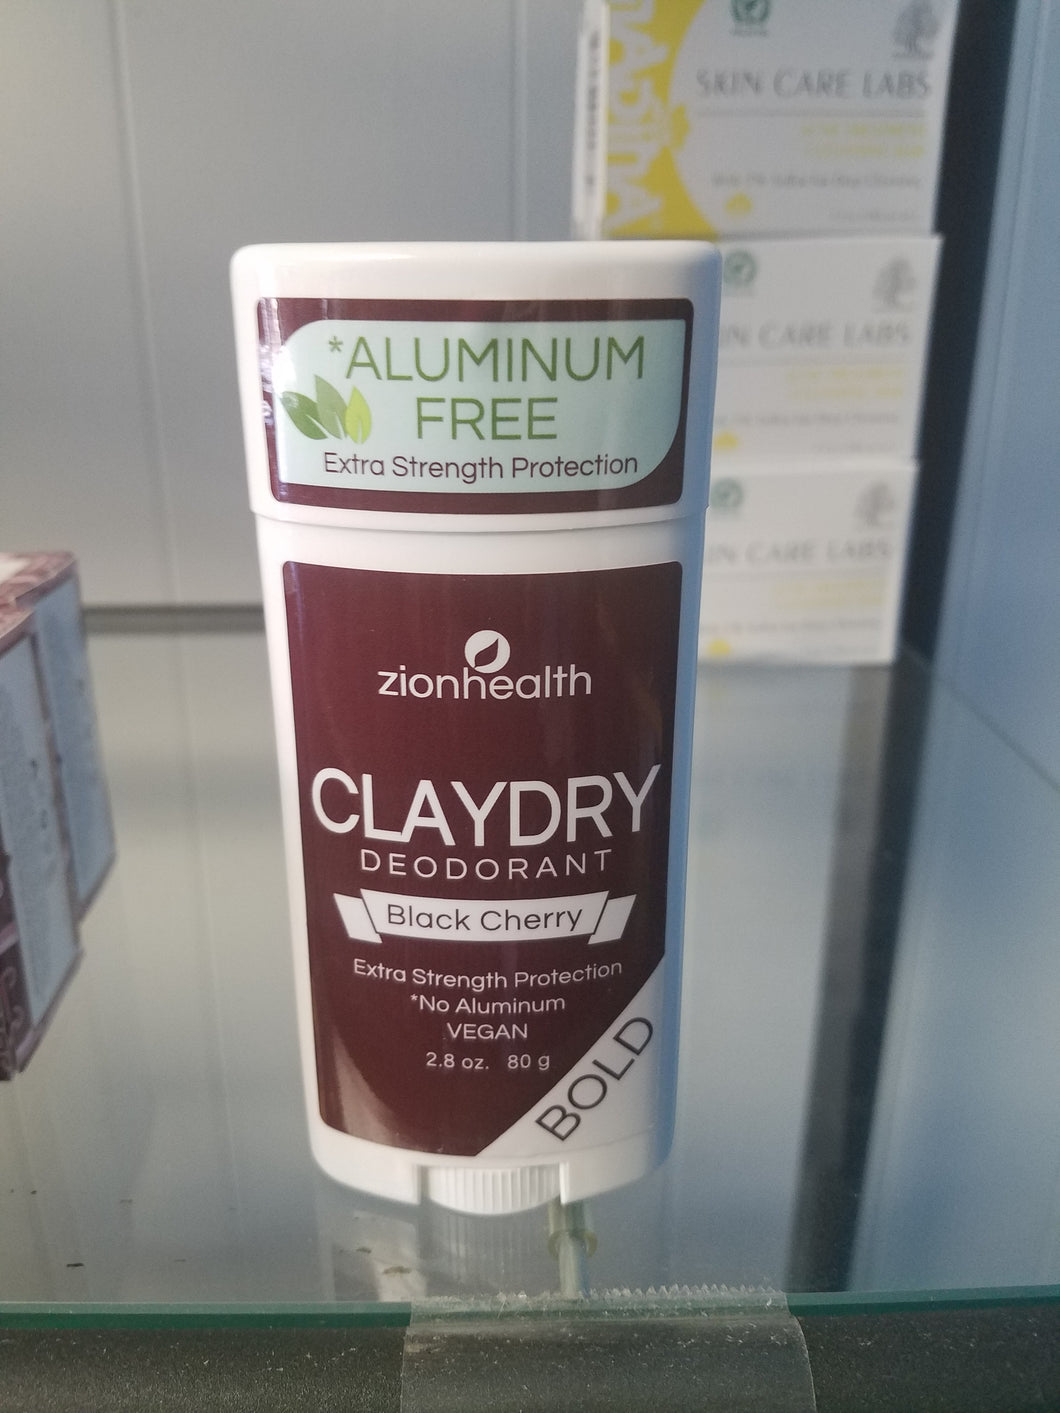 Claydry deodorant